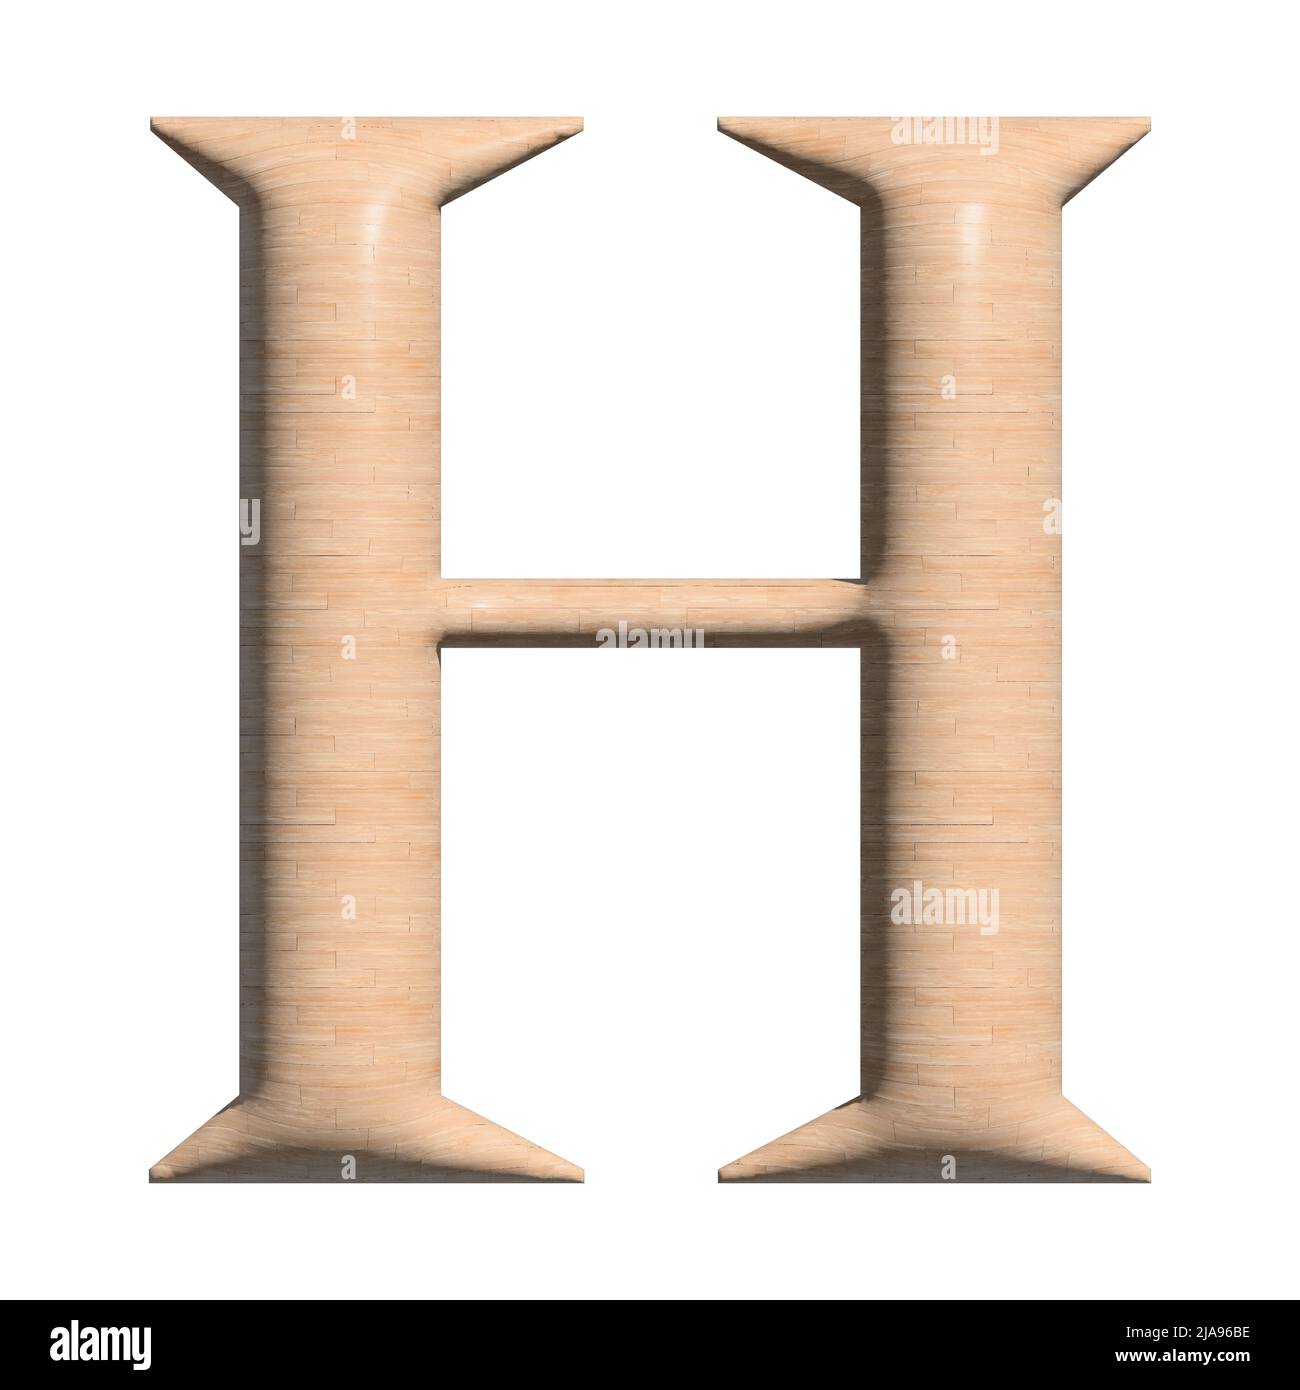 3D Wood capital H letter illustration on white background Stock Photo